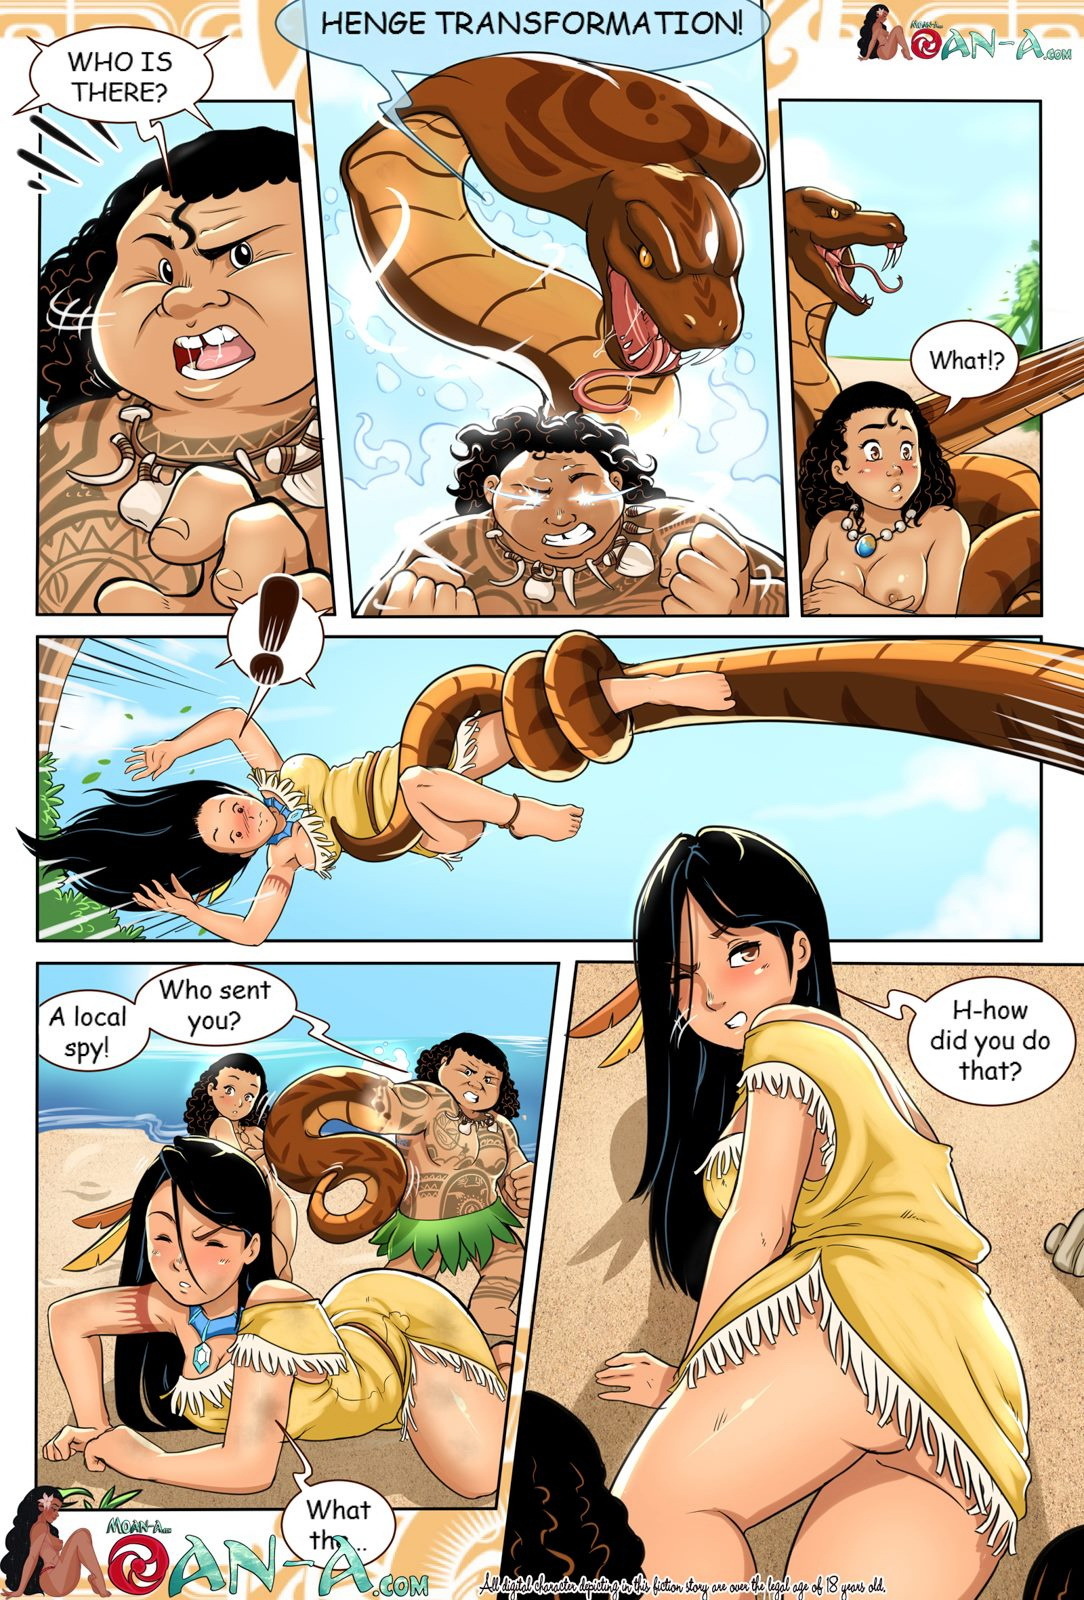 Moan-a Moana Lost - 2 - Page 6